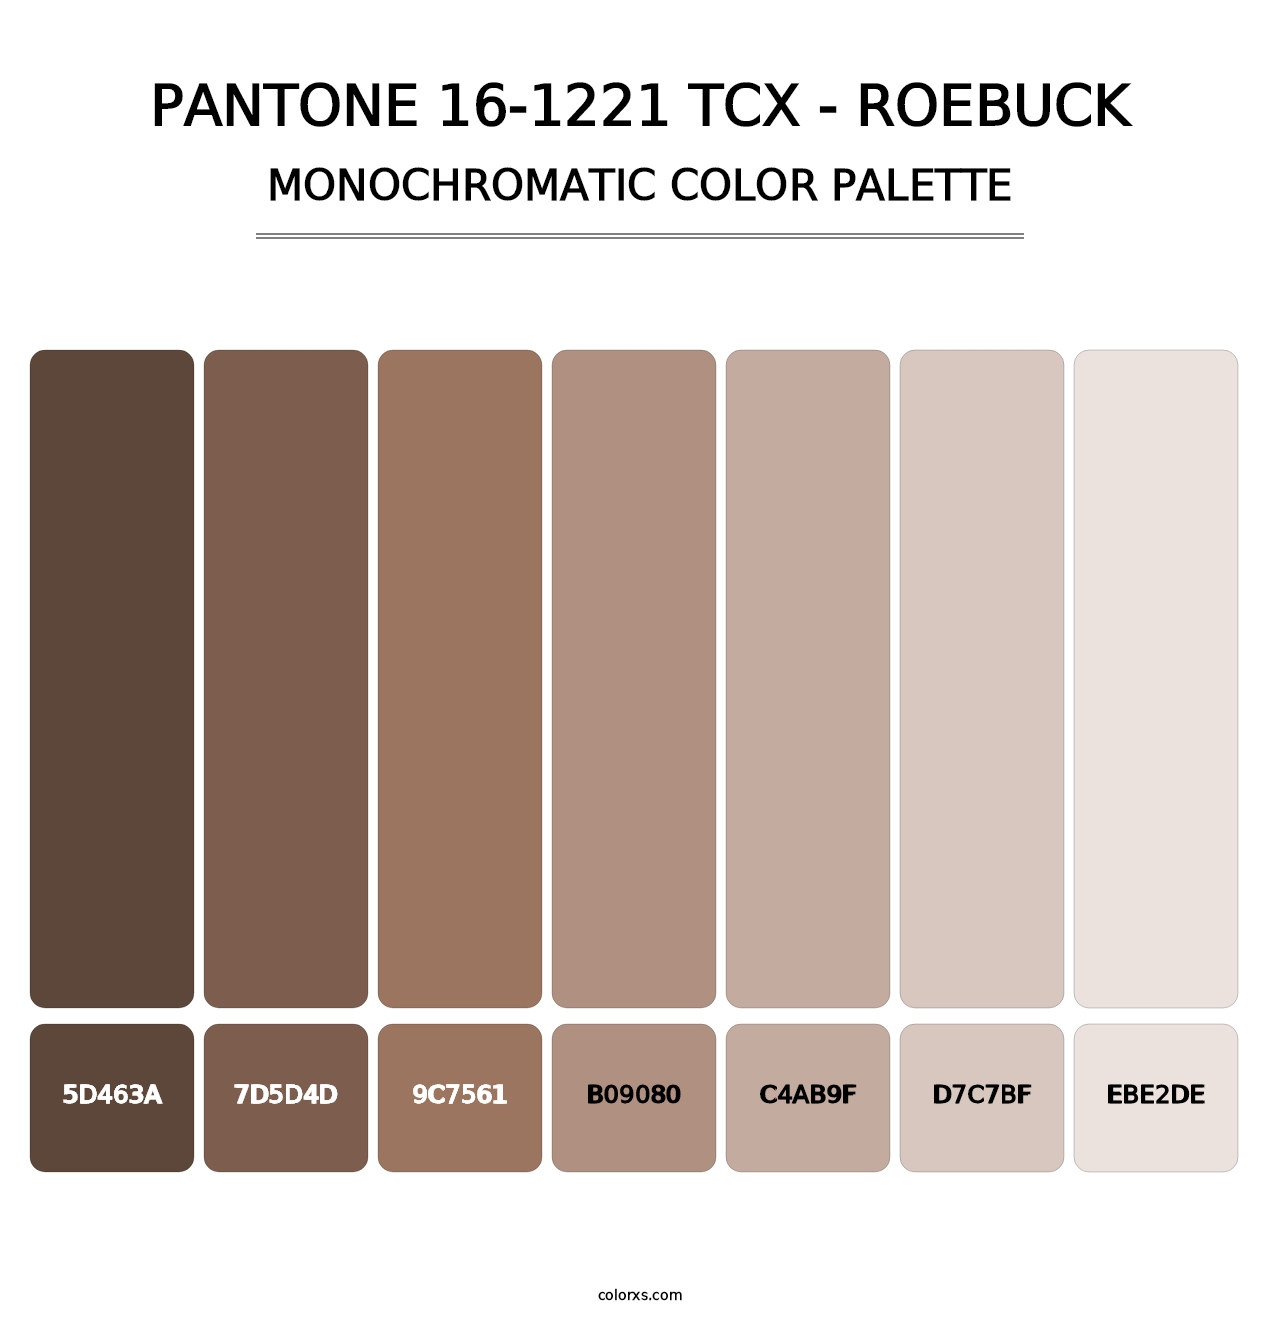 PANTONE 16-1221 TCX - Roebuck - Monochromatic Color Palette